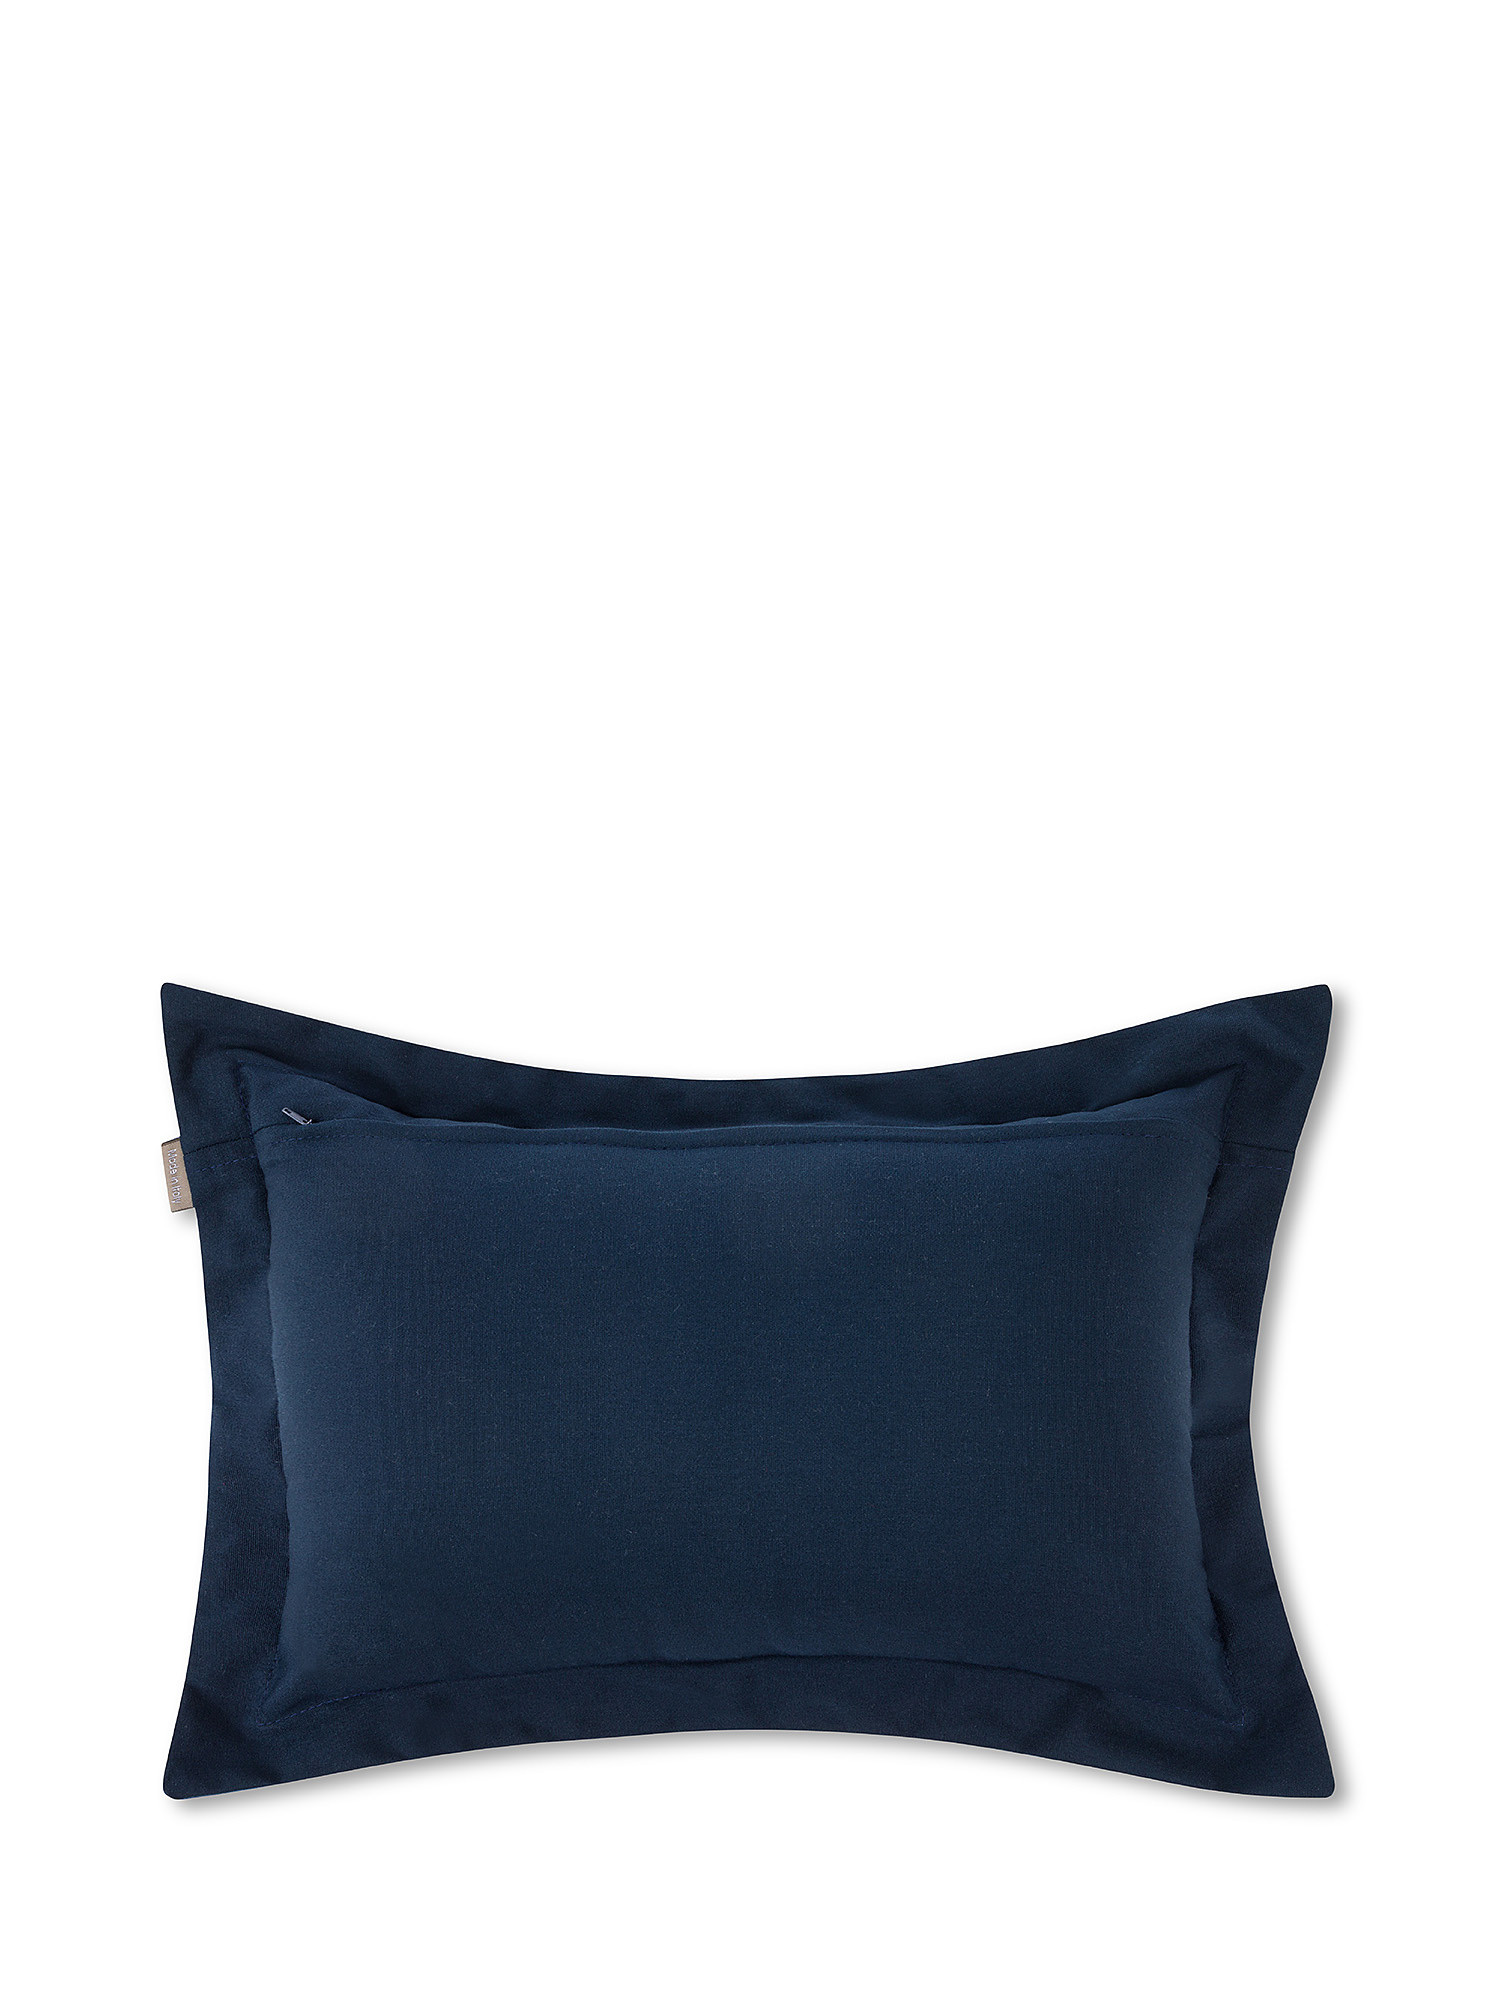 Cuscino da esterno in tessuto double color 30x50cm, Blu, large image number 1